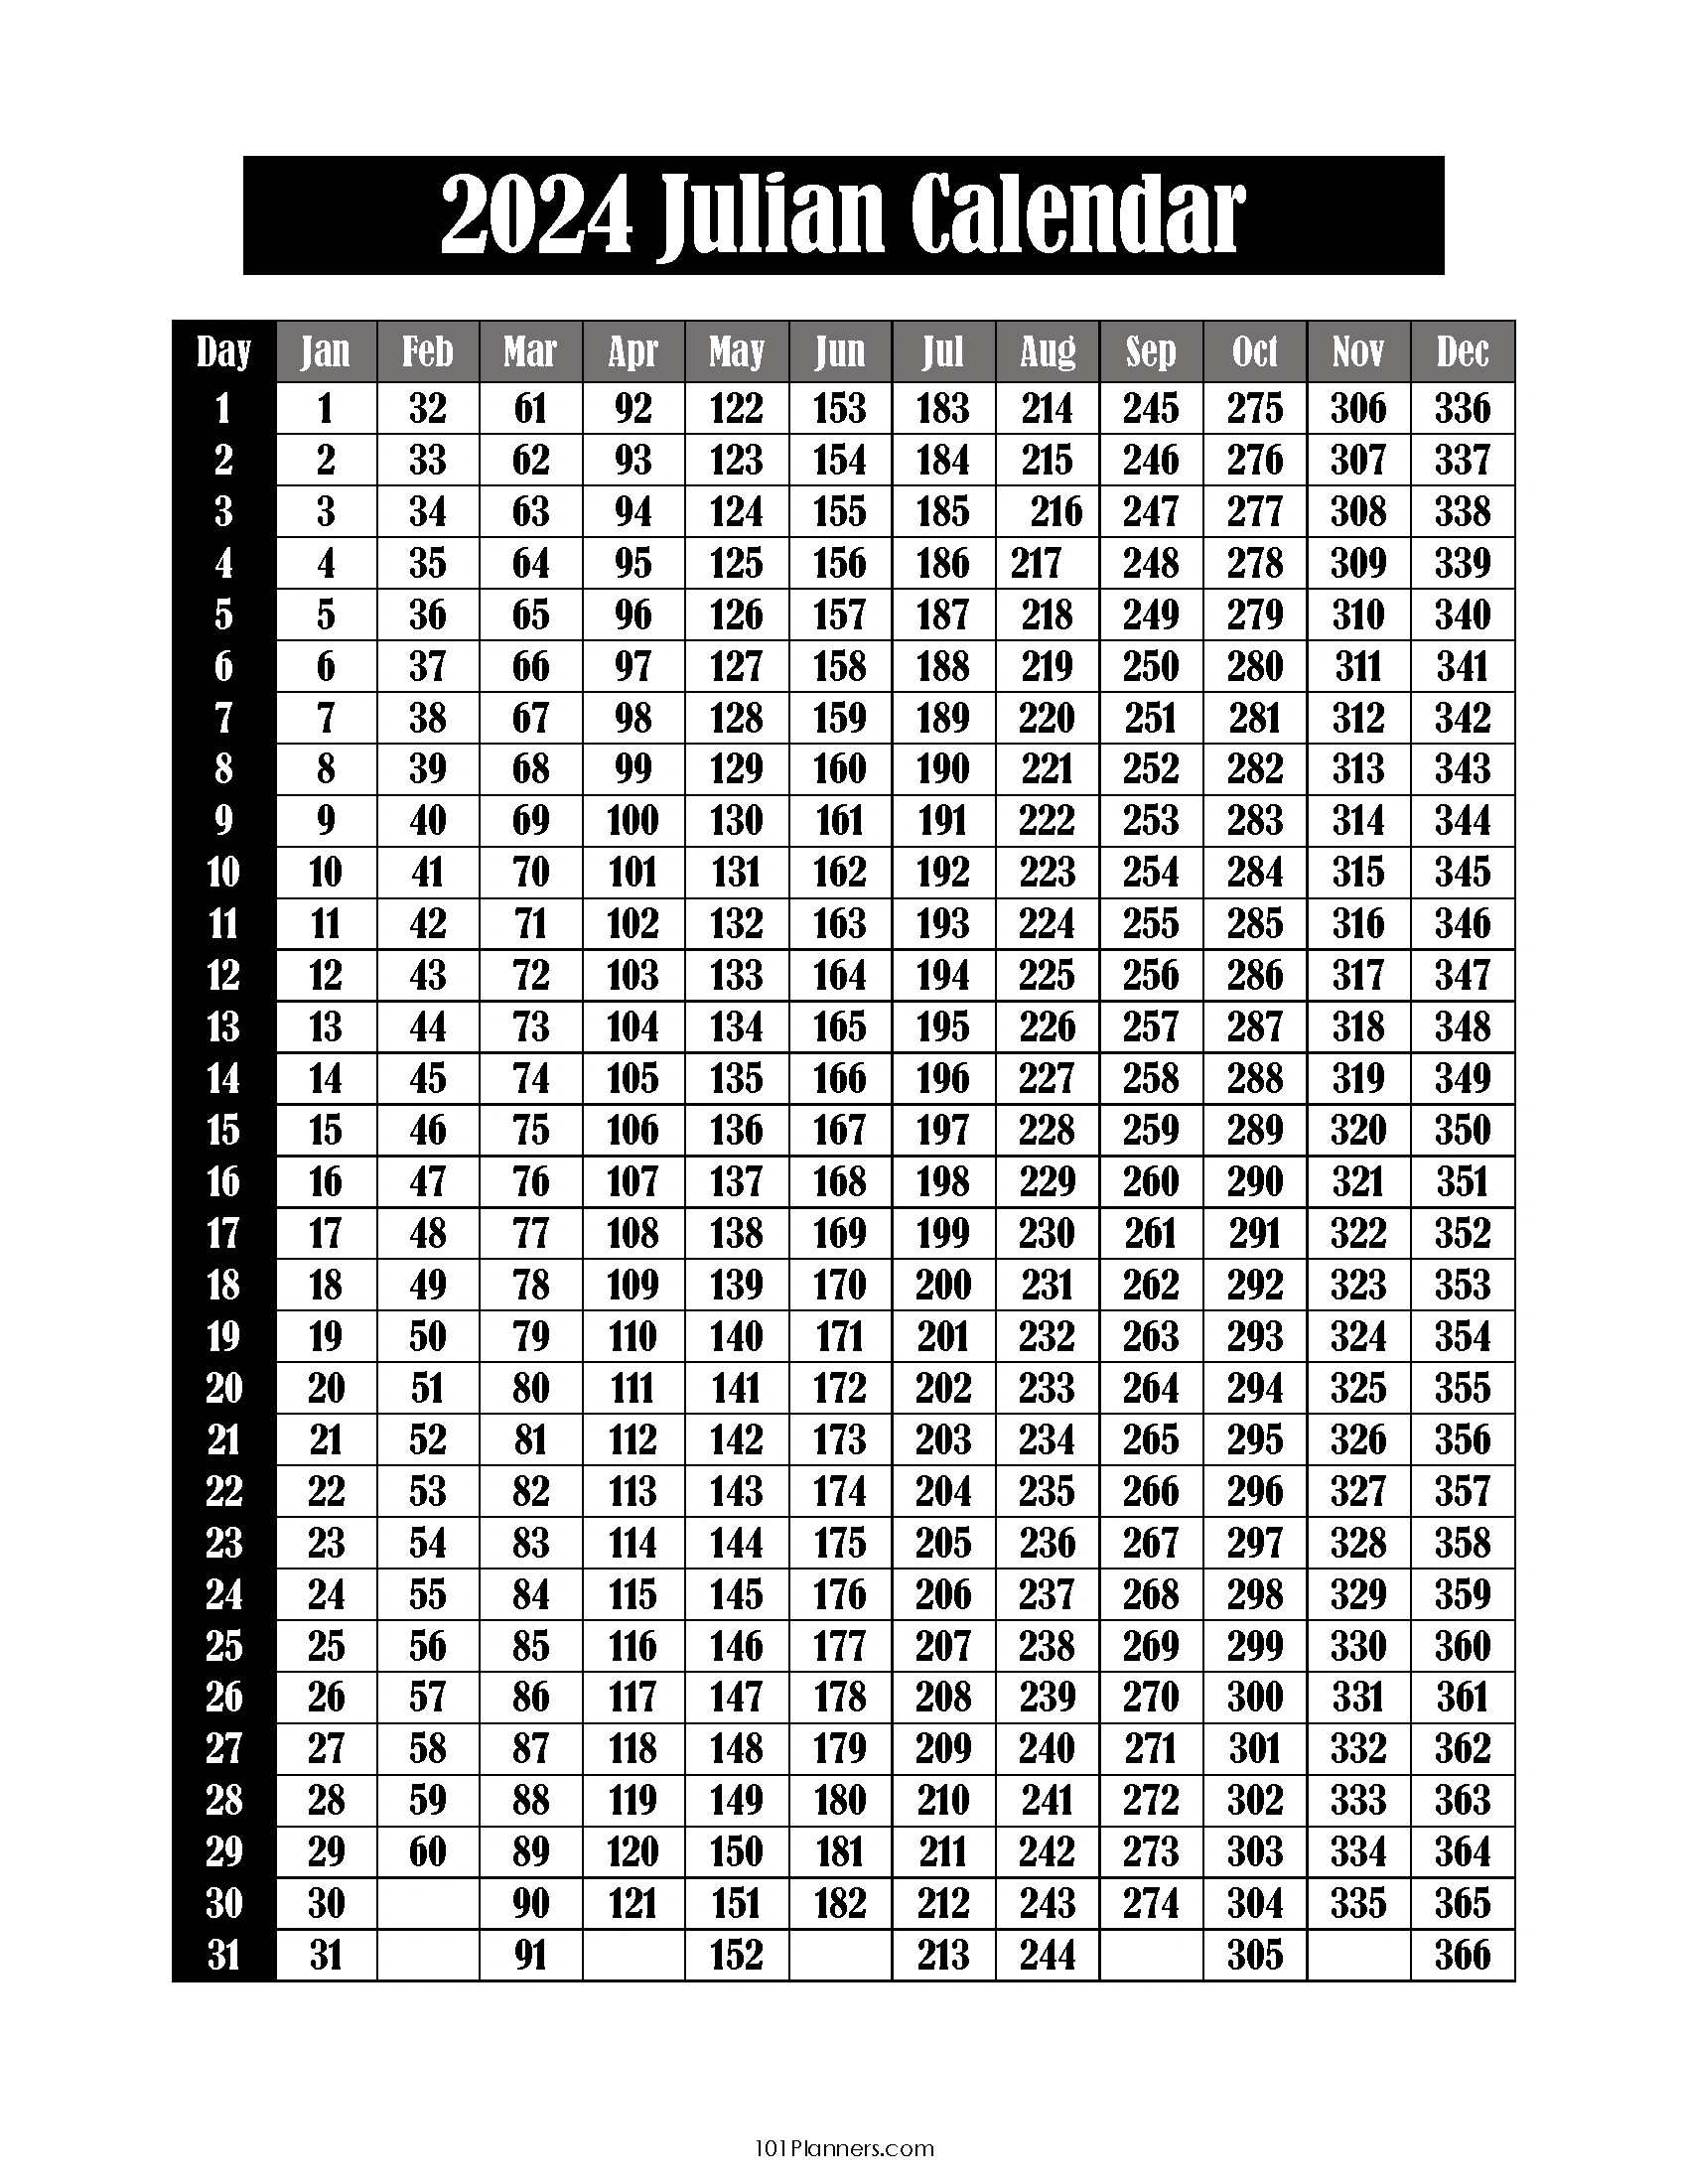 Free Printable Julian Calendar 2024-2032 | Julian Date Today intended for February 2024 Julian Calendar